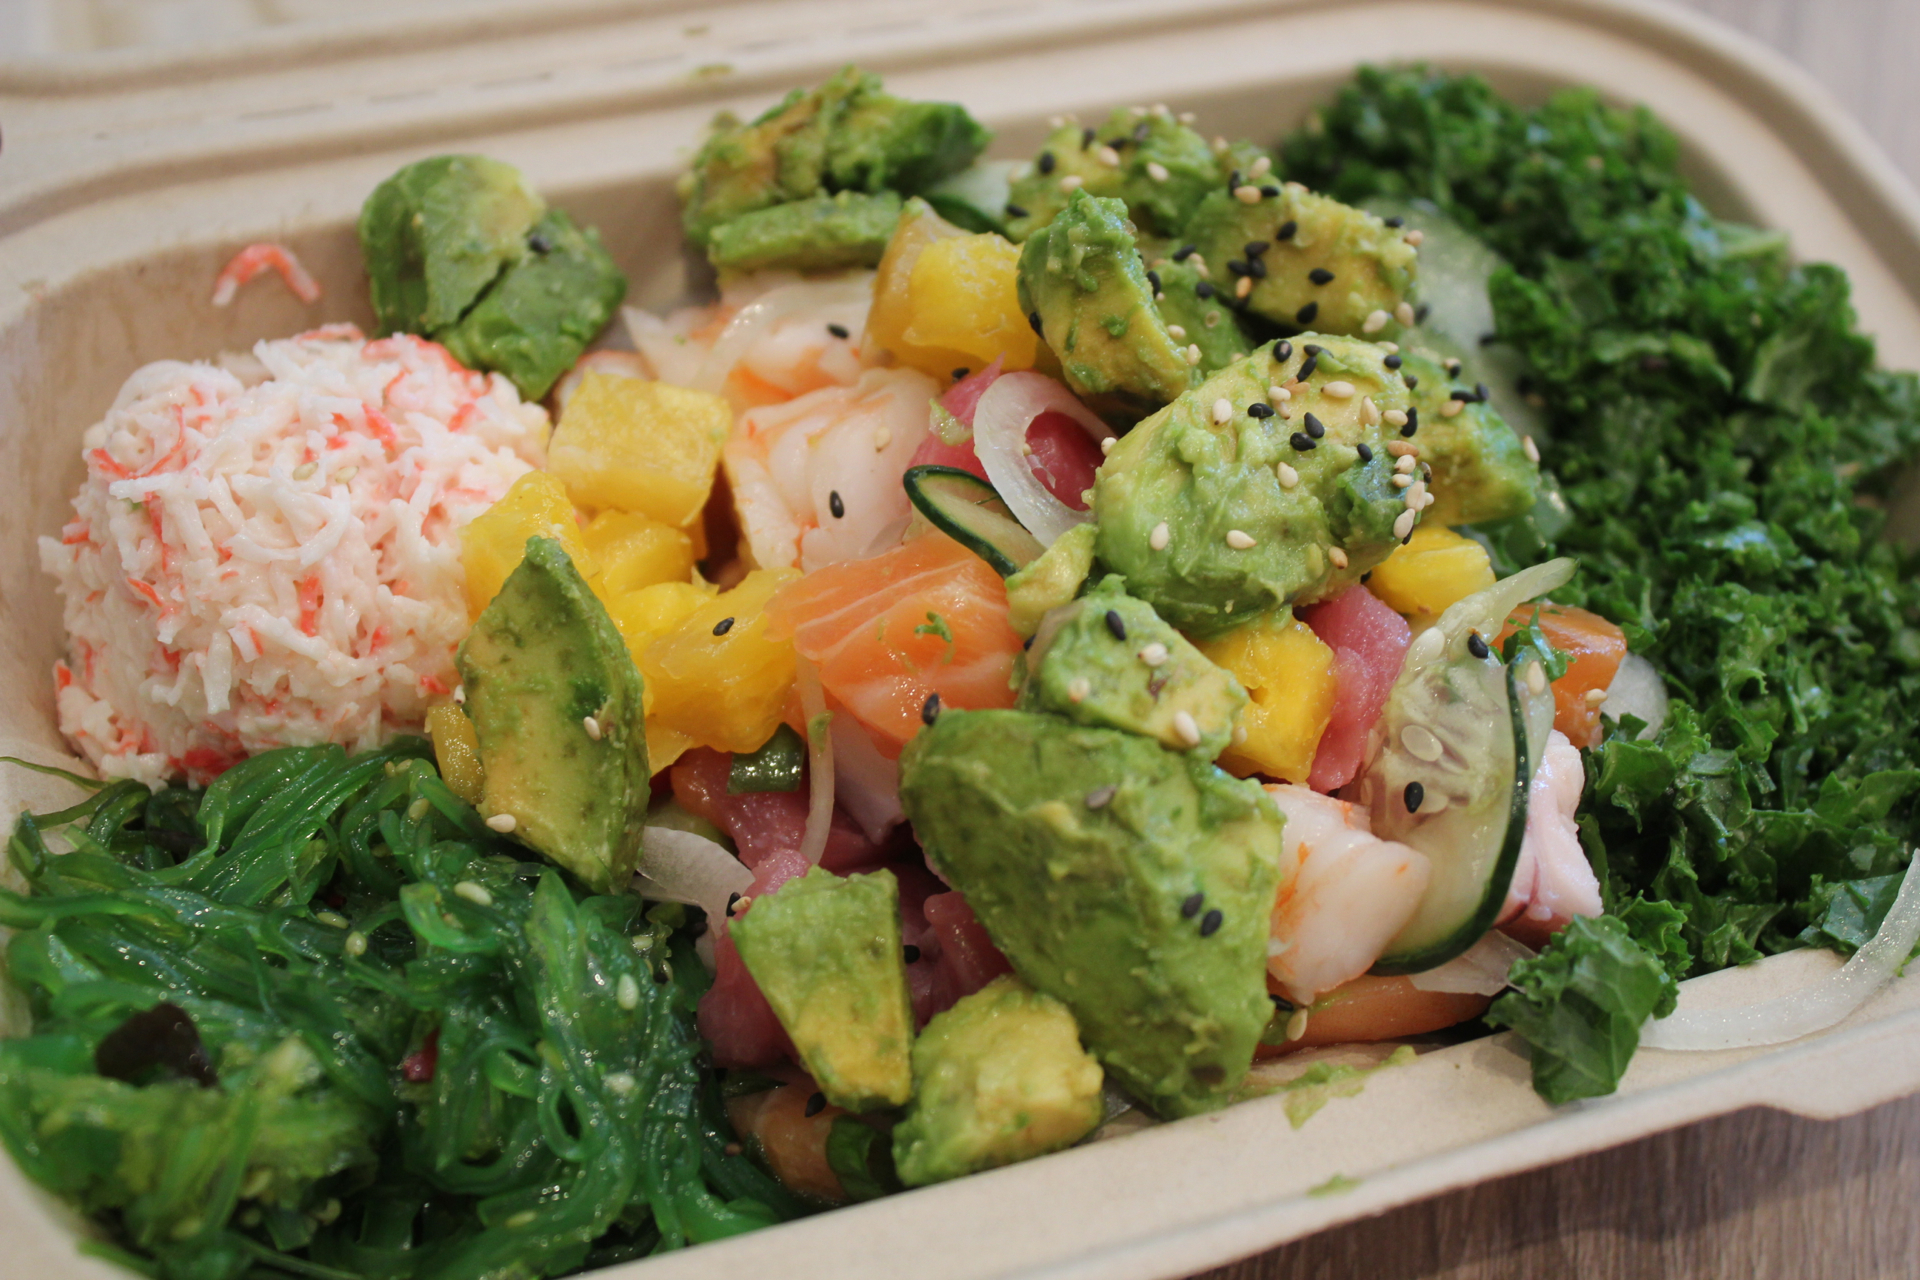 Salmon, ahi tuna and shrimp with mangos over a kale salad.